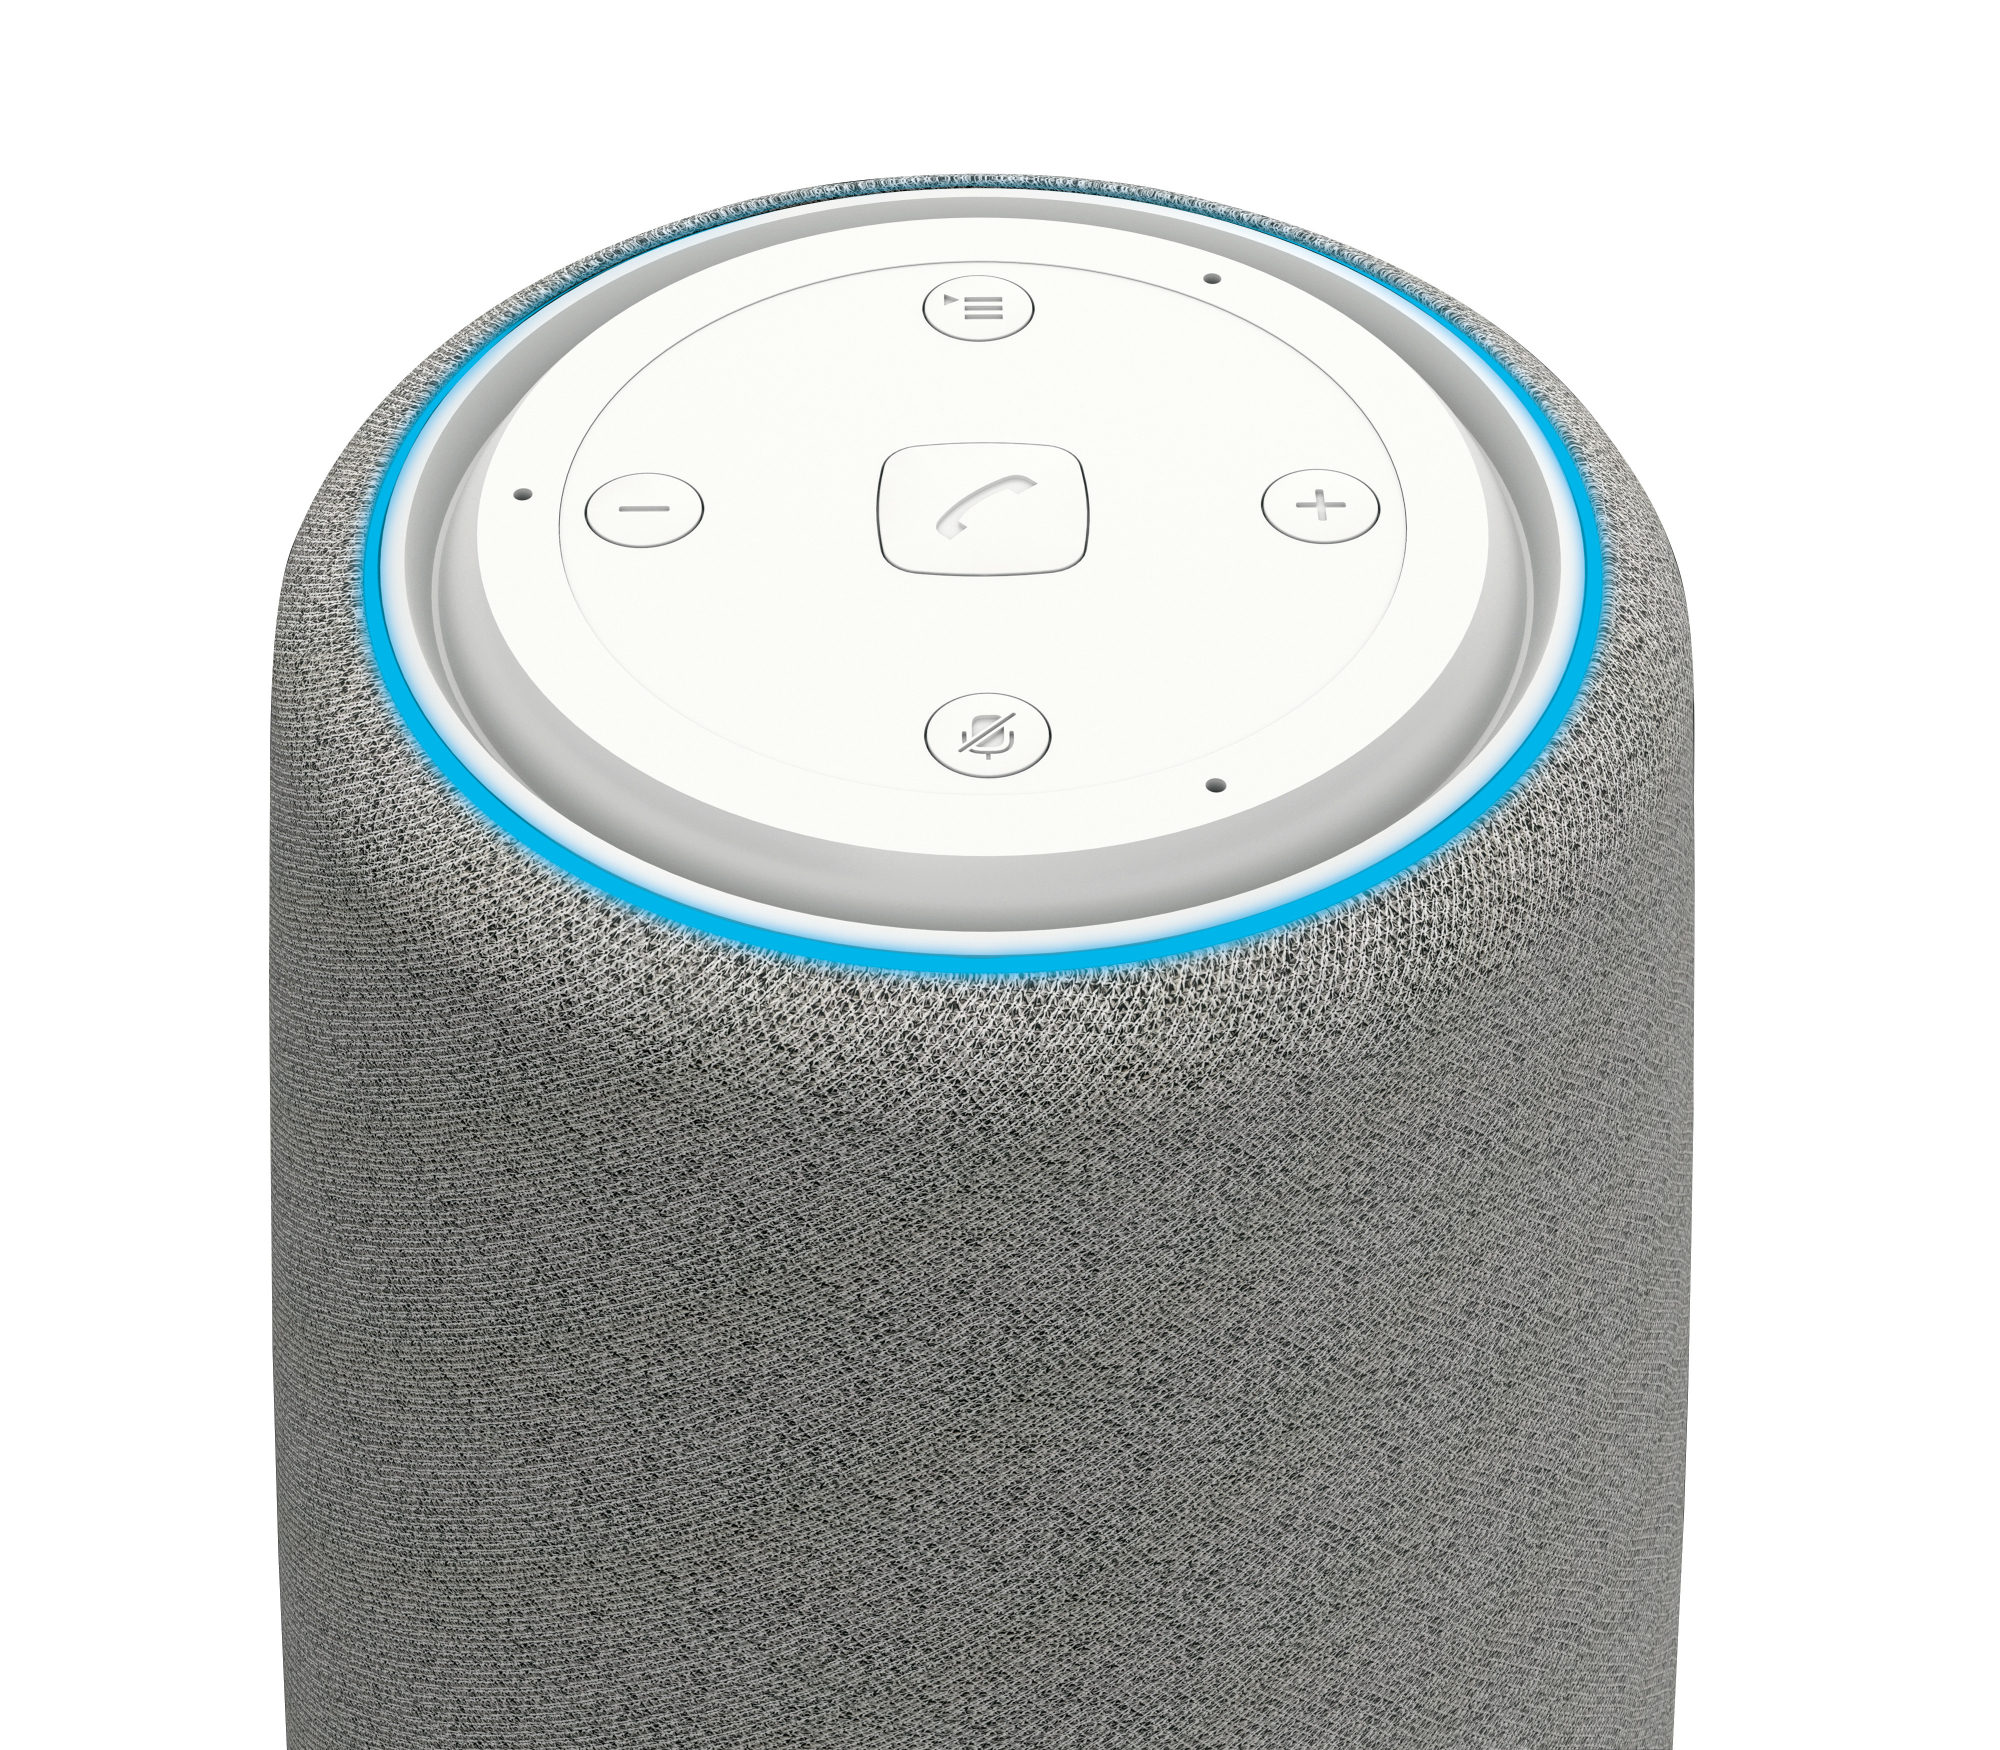 Gigasets Alexa-Lautsprecher kann per DECT telefonieren | heise online